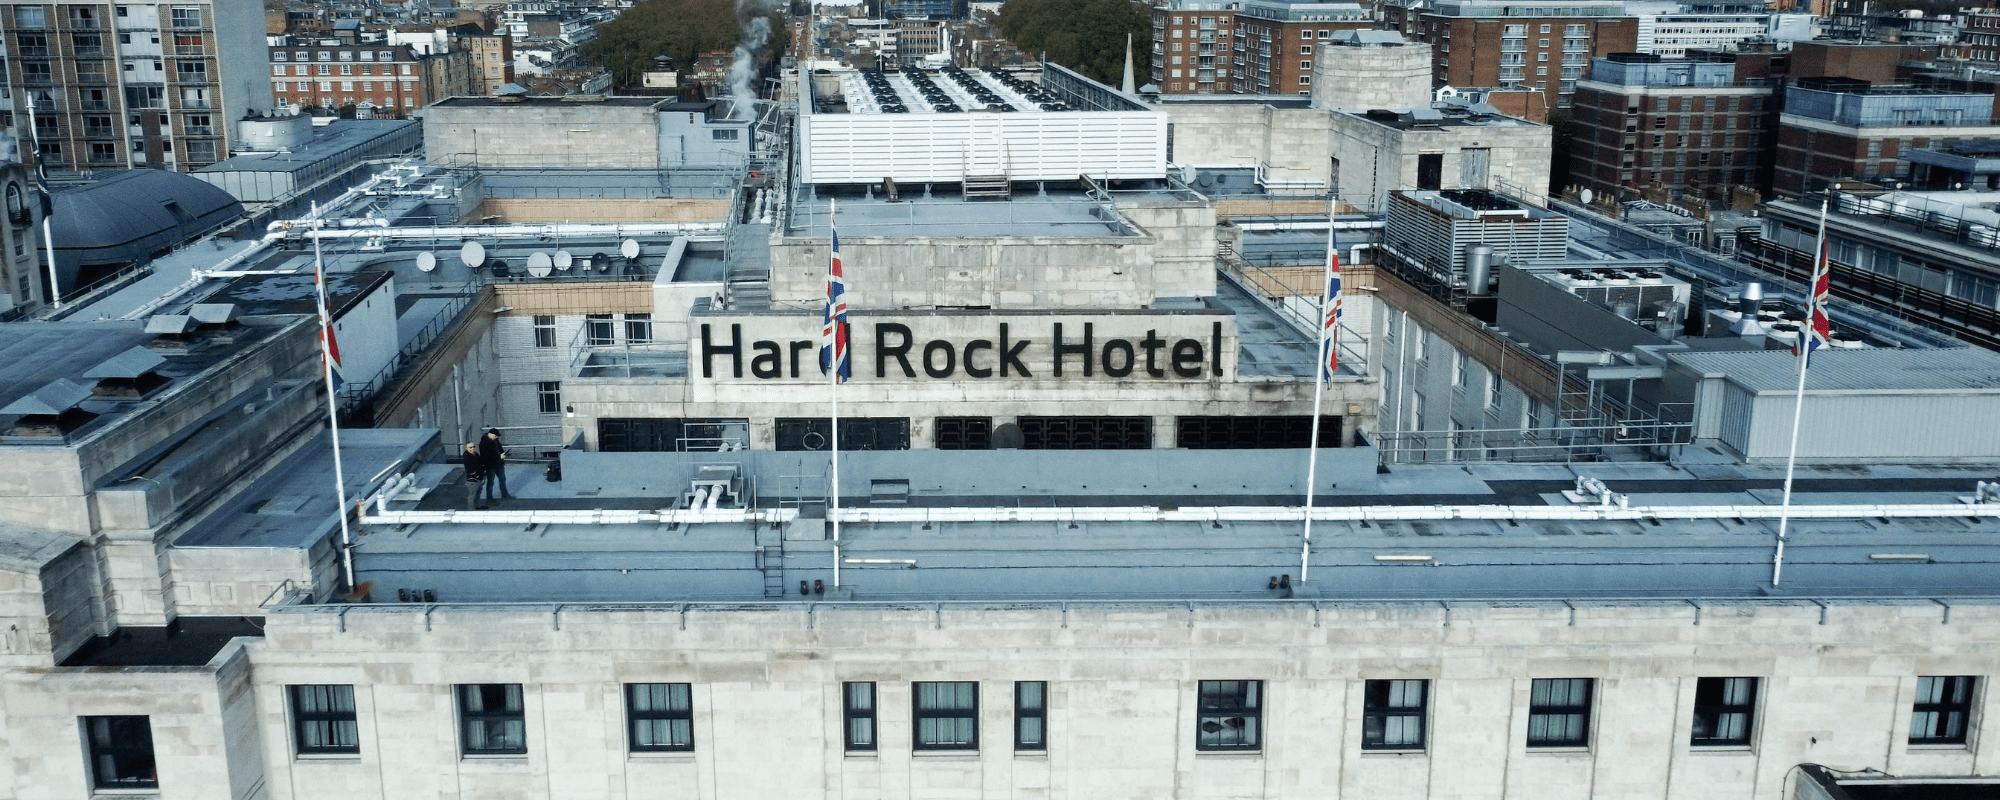 Hard Rock Hotel - Rooftop Image Branding